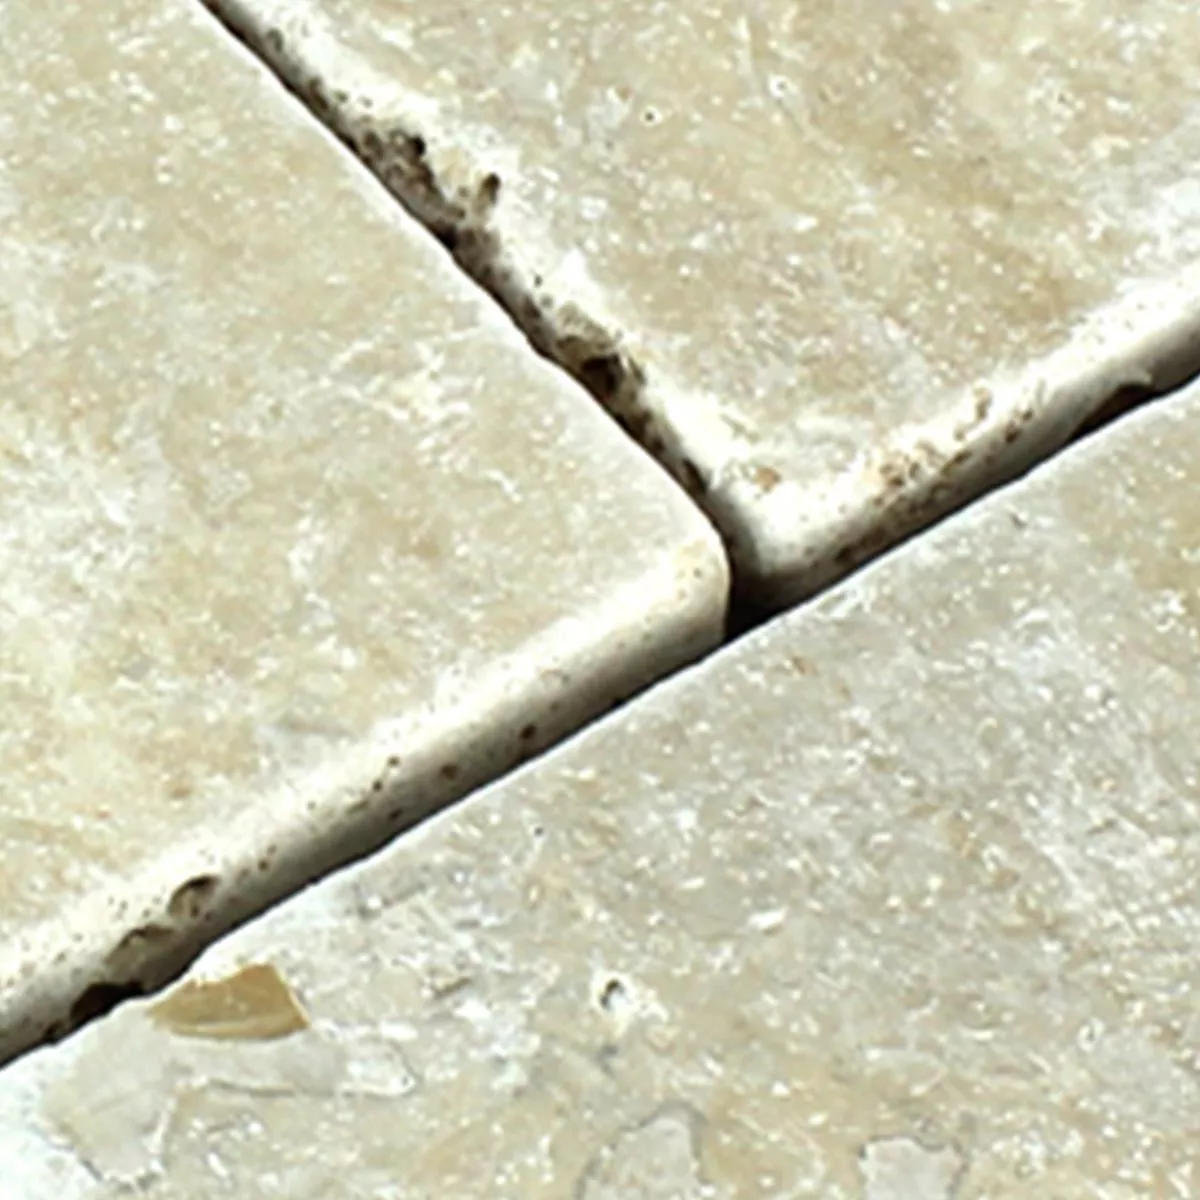 Sample Travertin Tegel Chiaro Brick